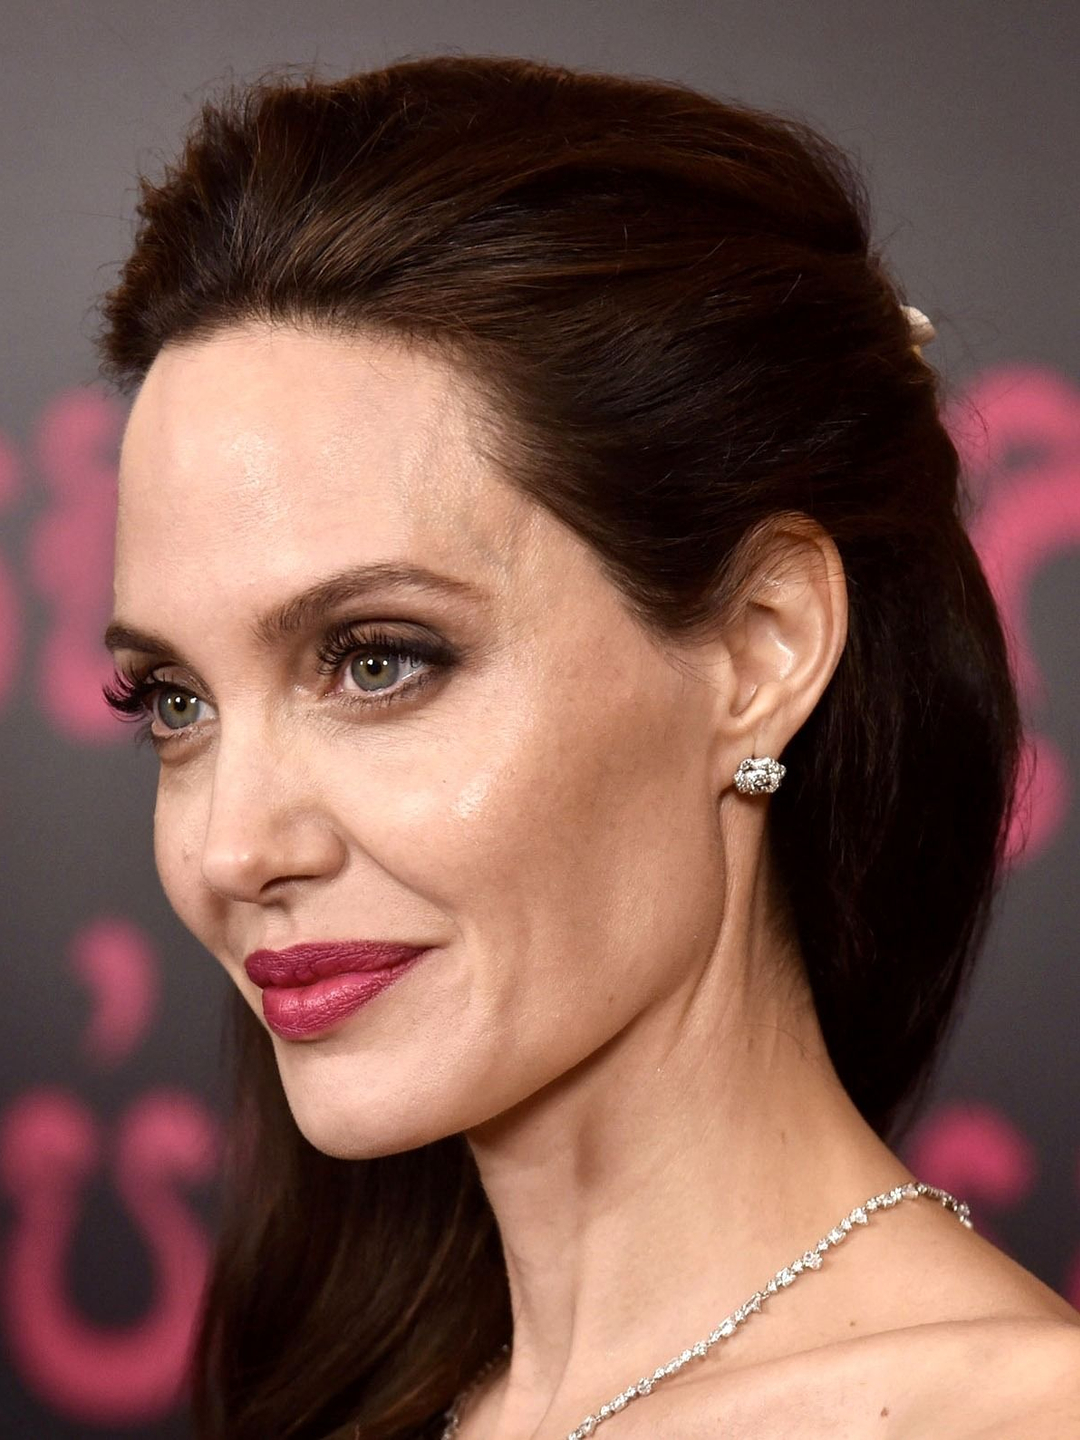 Angelina Jolie young photos